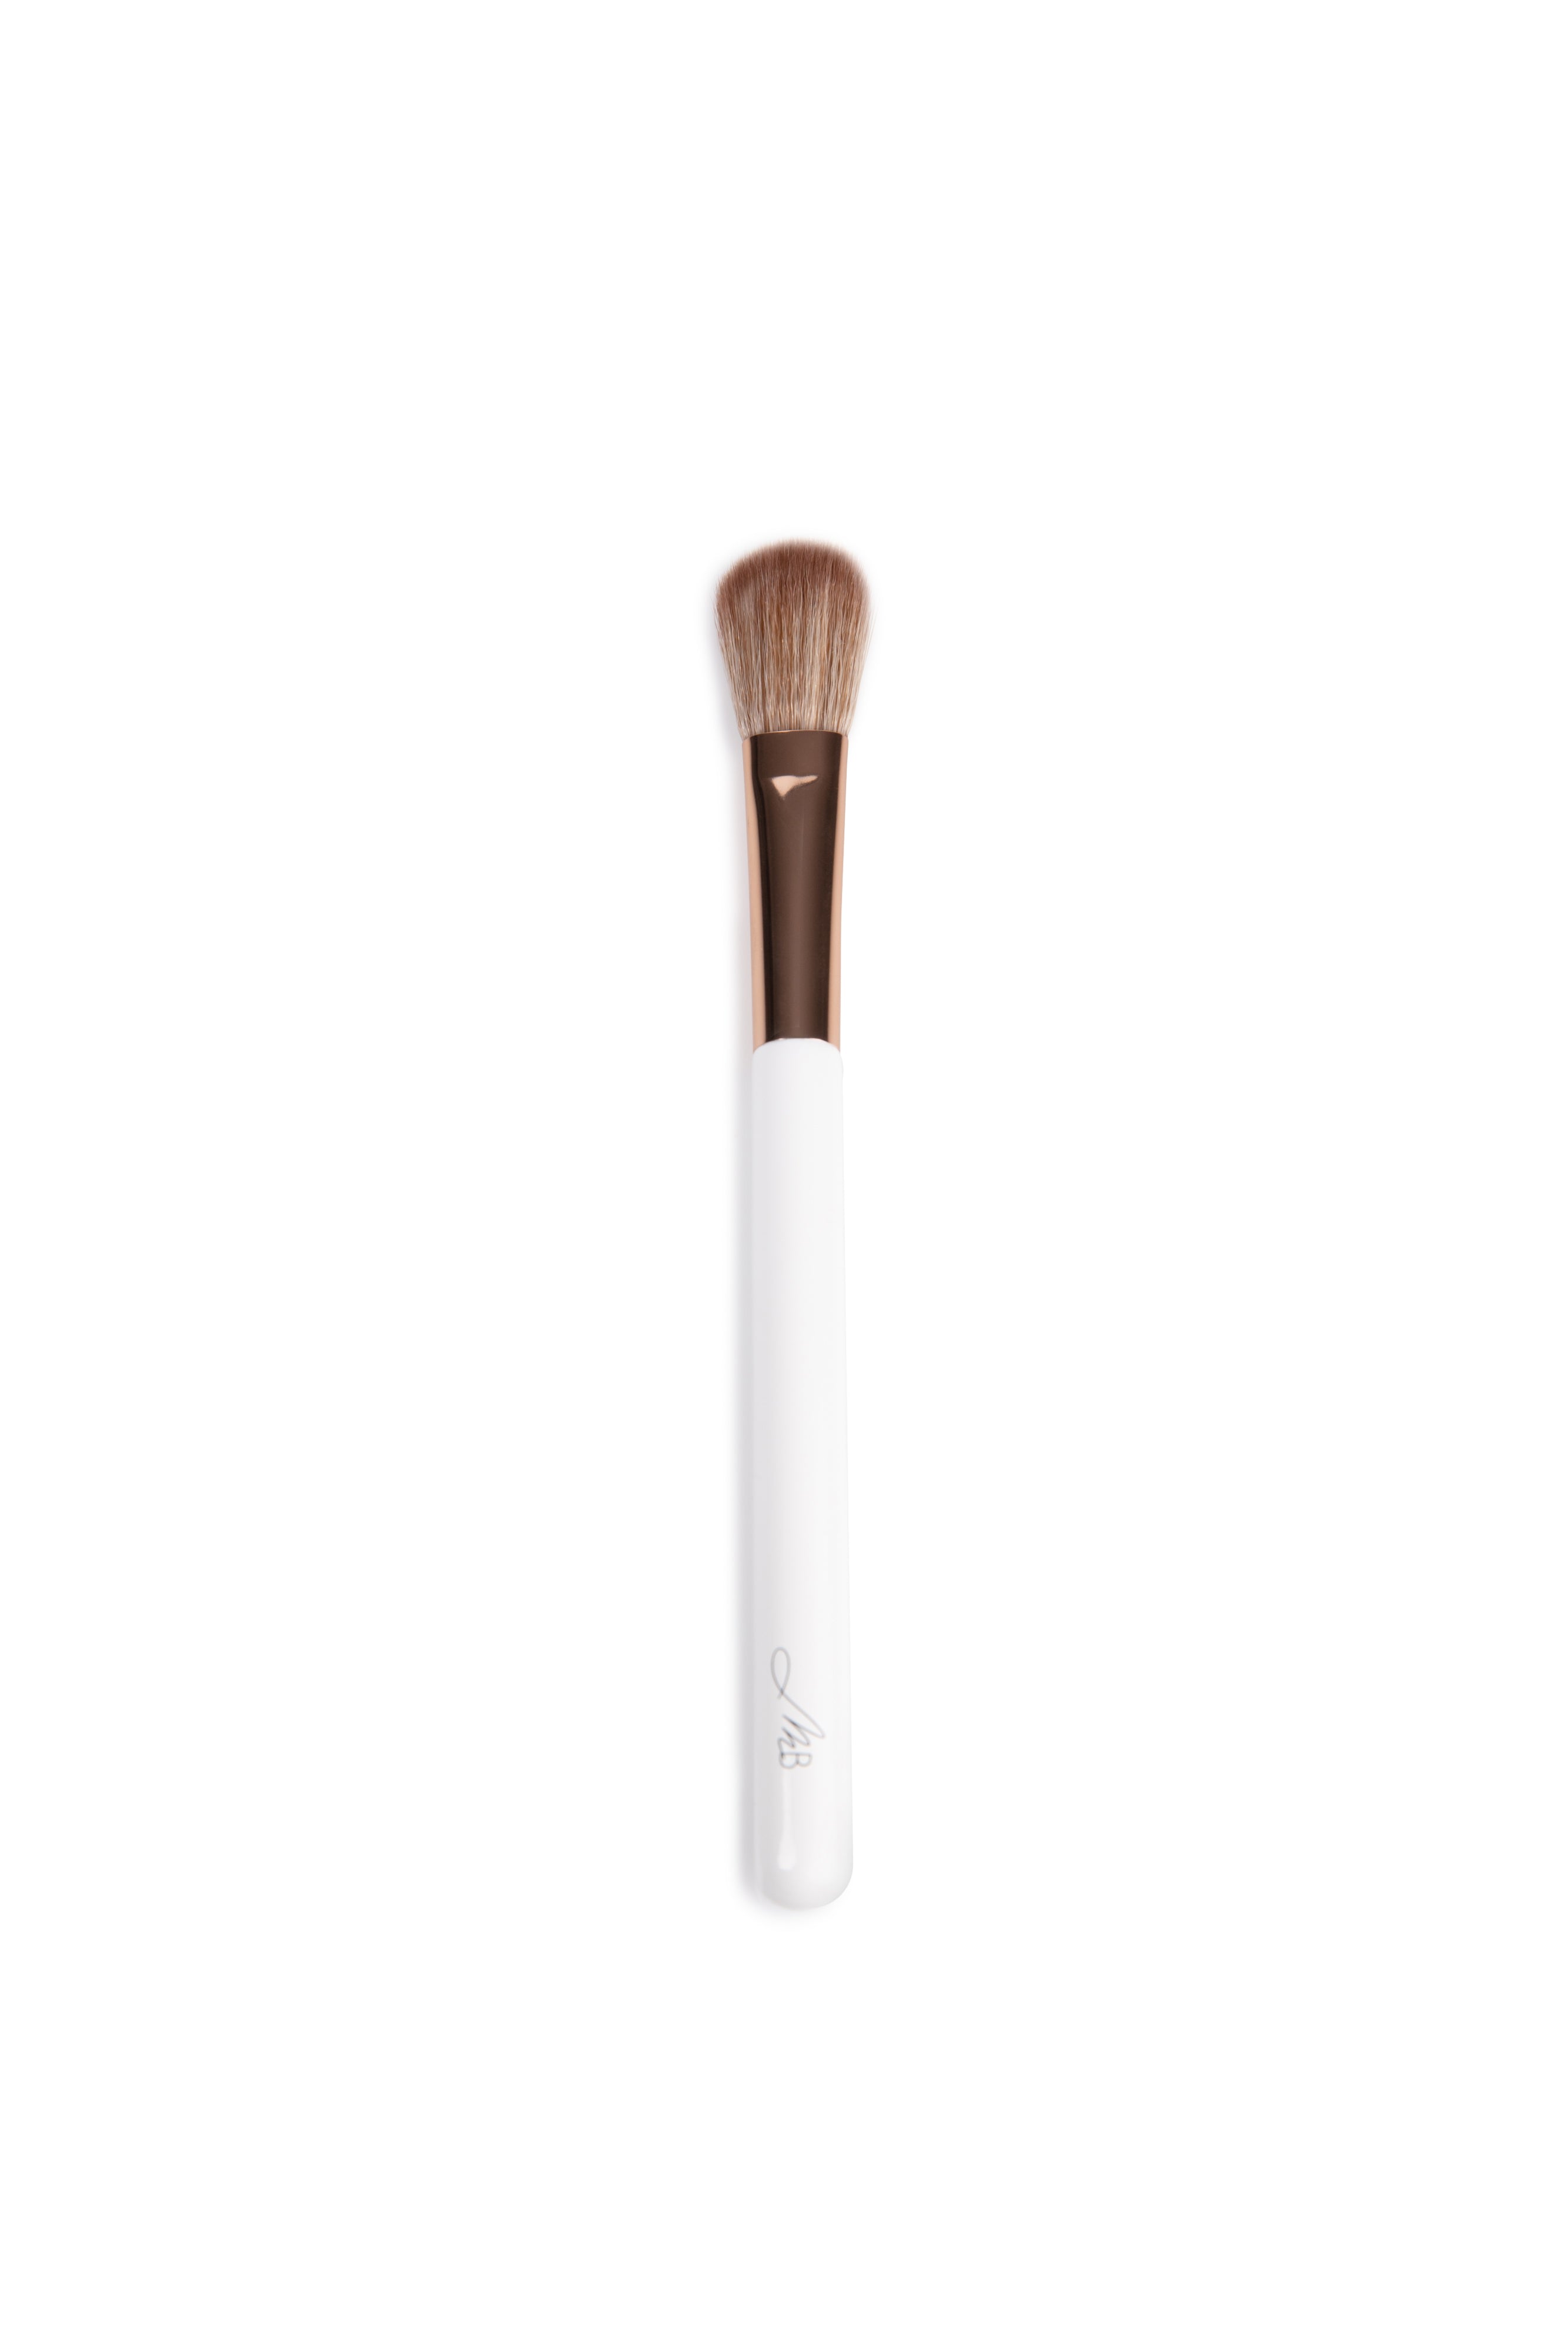 Monika Blunder Beauty Hybrid Cream Brush In White